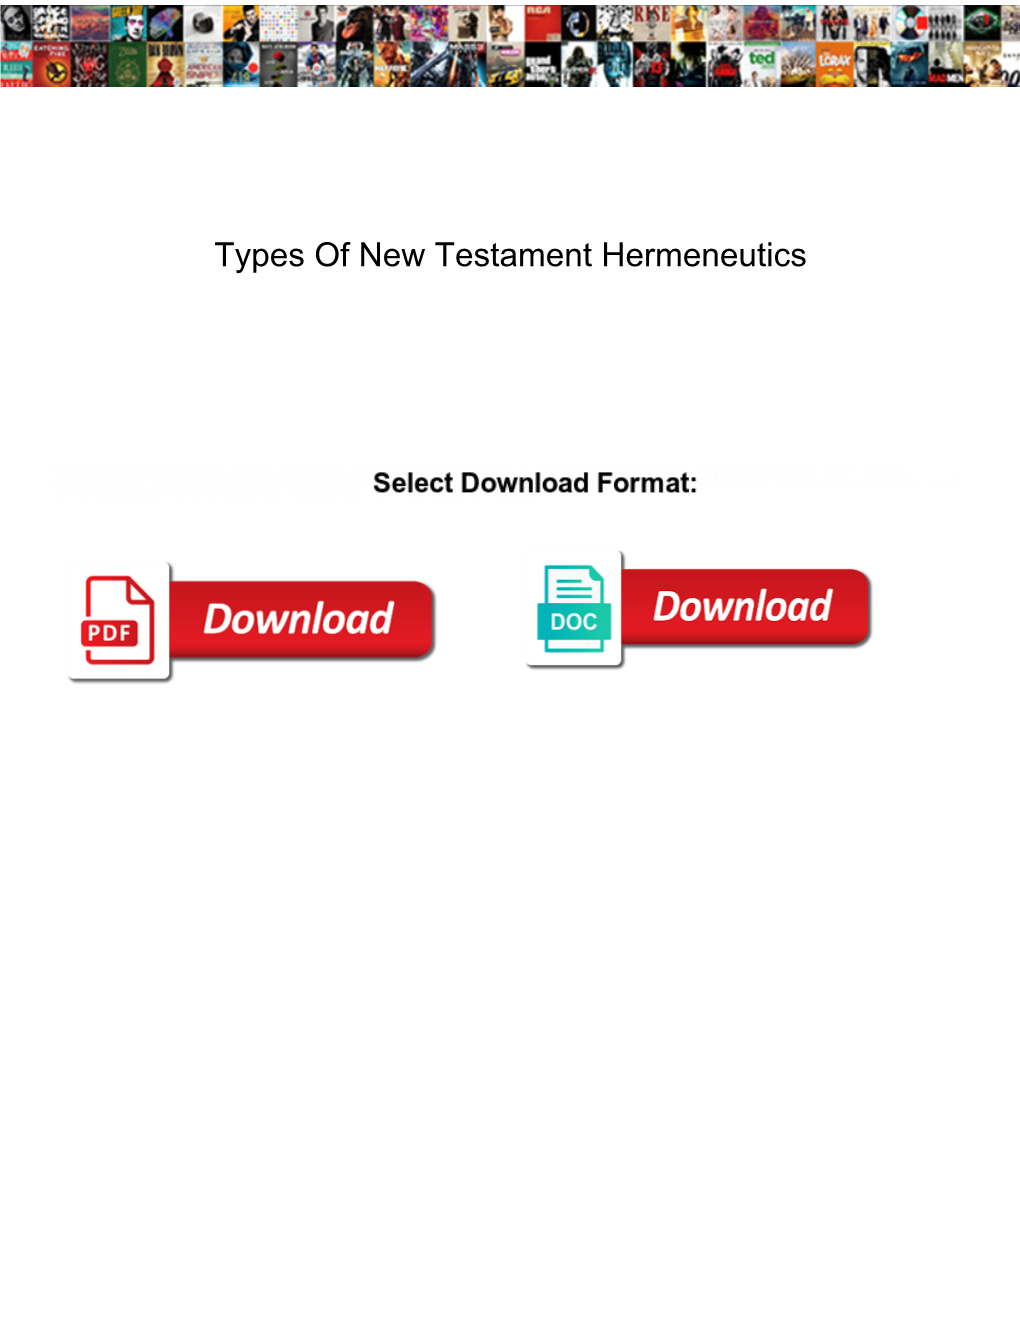 Types of New Testament Hermeneutics